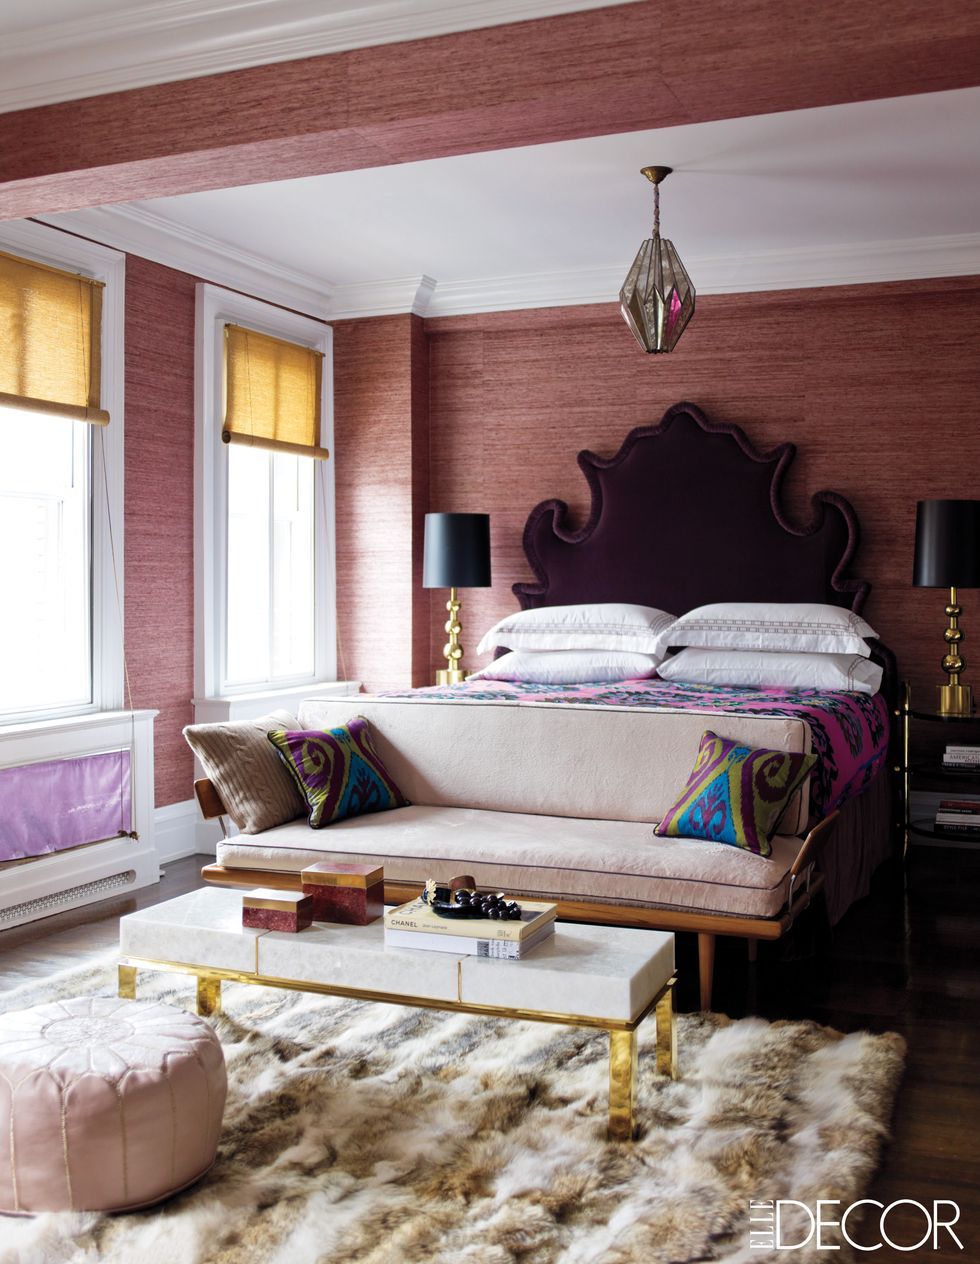 How to Make Your Bedroom Look Expensive - Luxury Bedroom Ideas